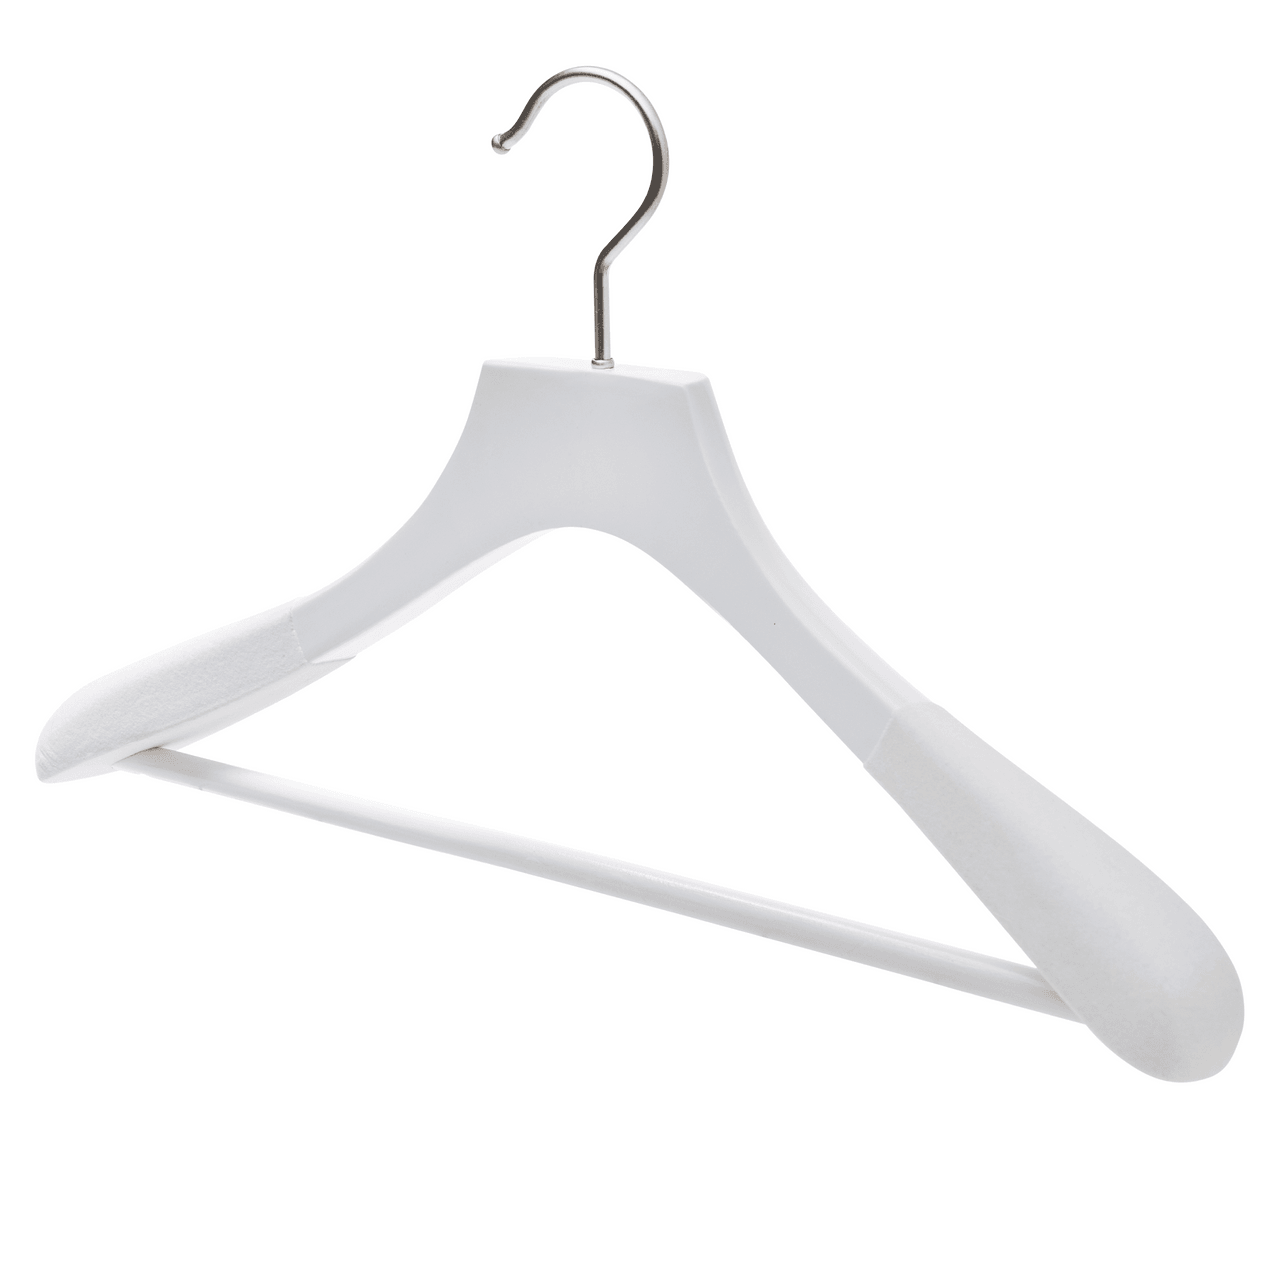 White Wood Coat Hanger With Bar - 46cm X 50mm Thick Shoulders with White Velvet Coating Sold 5/10/20 - Hangersforless